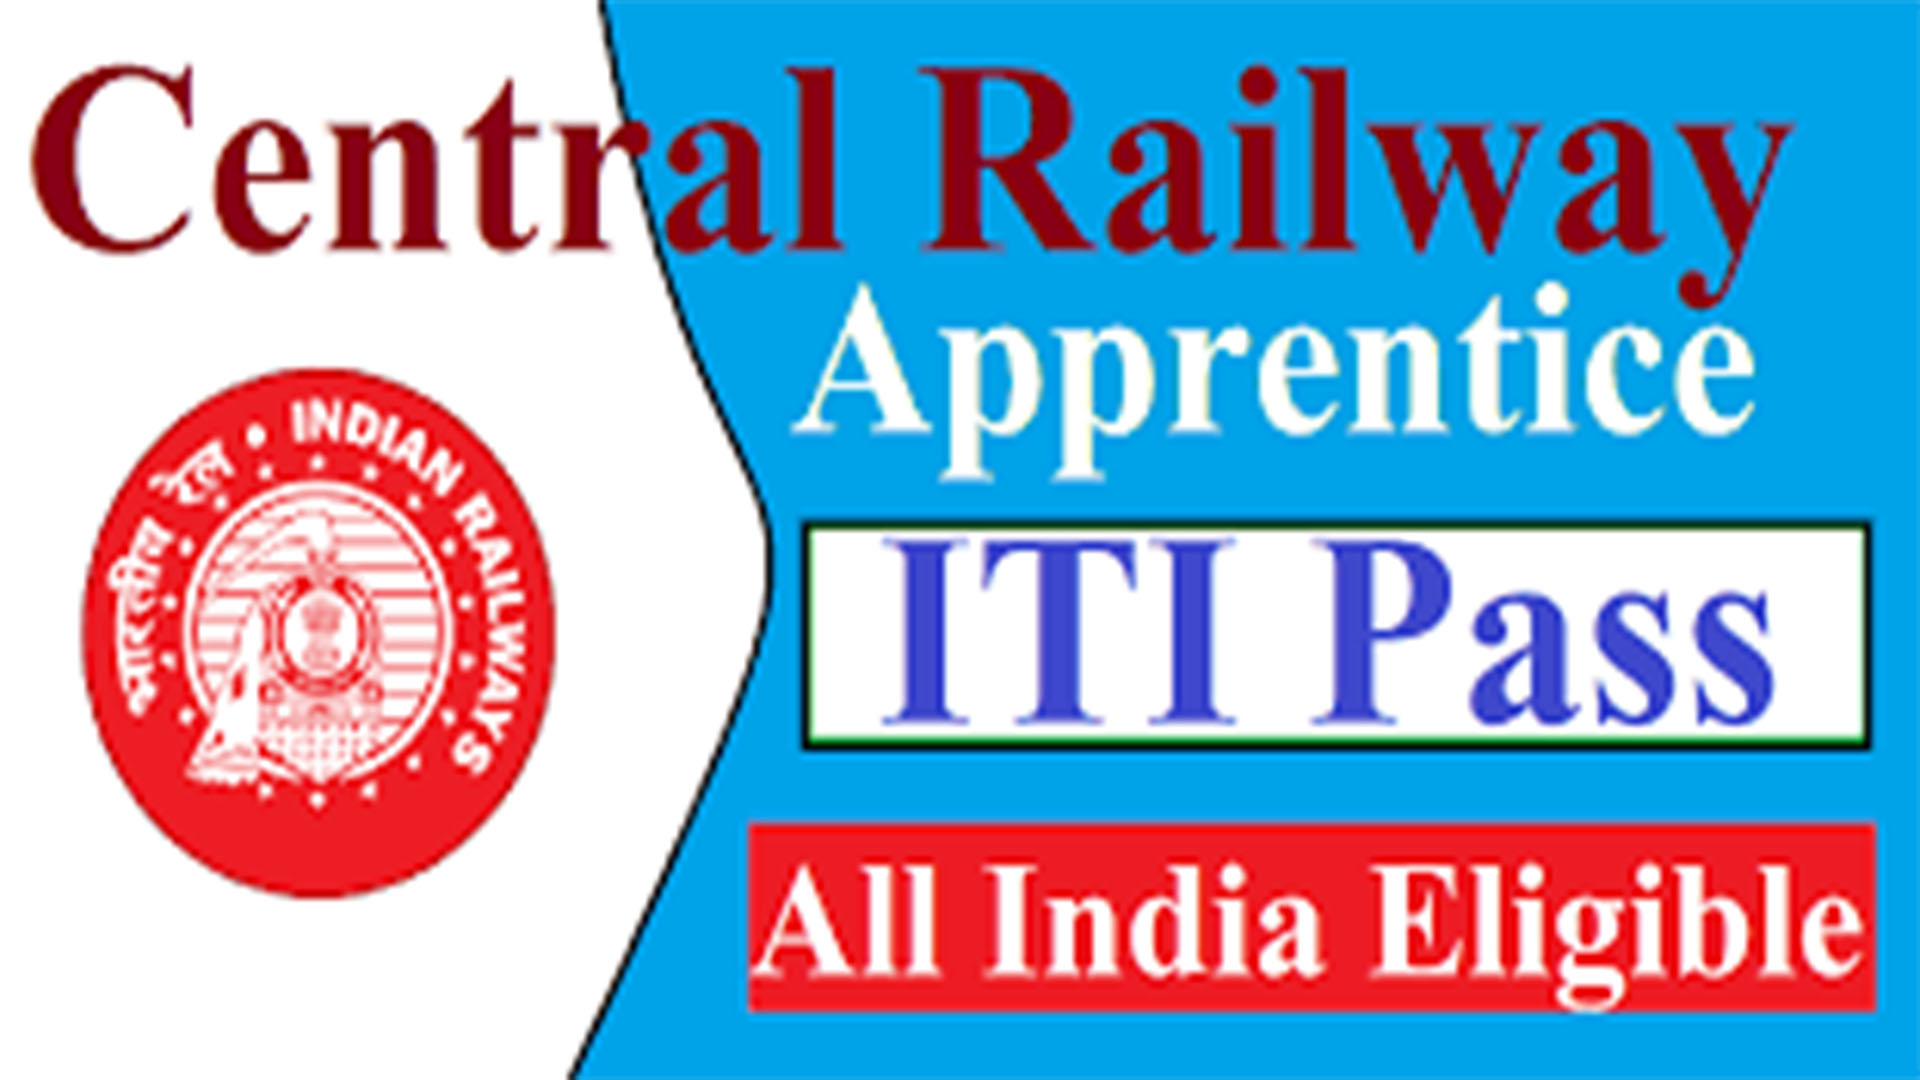 Central Railway Apprentice Recruitment 2022-23